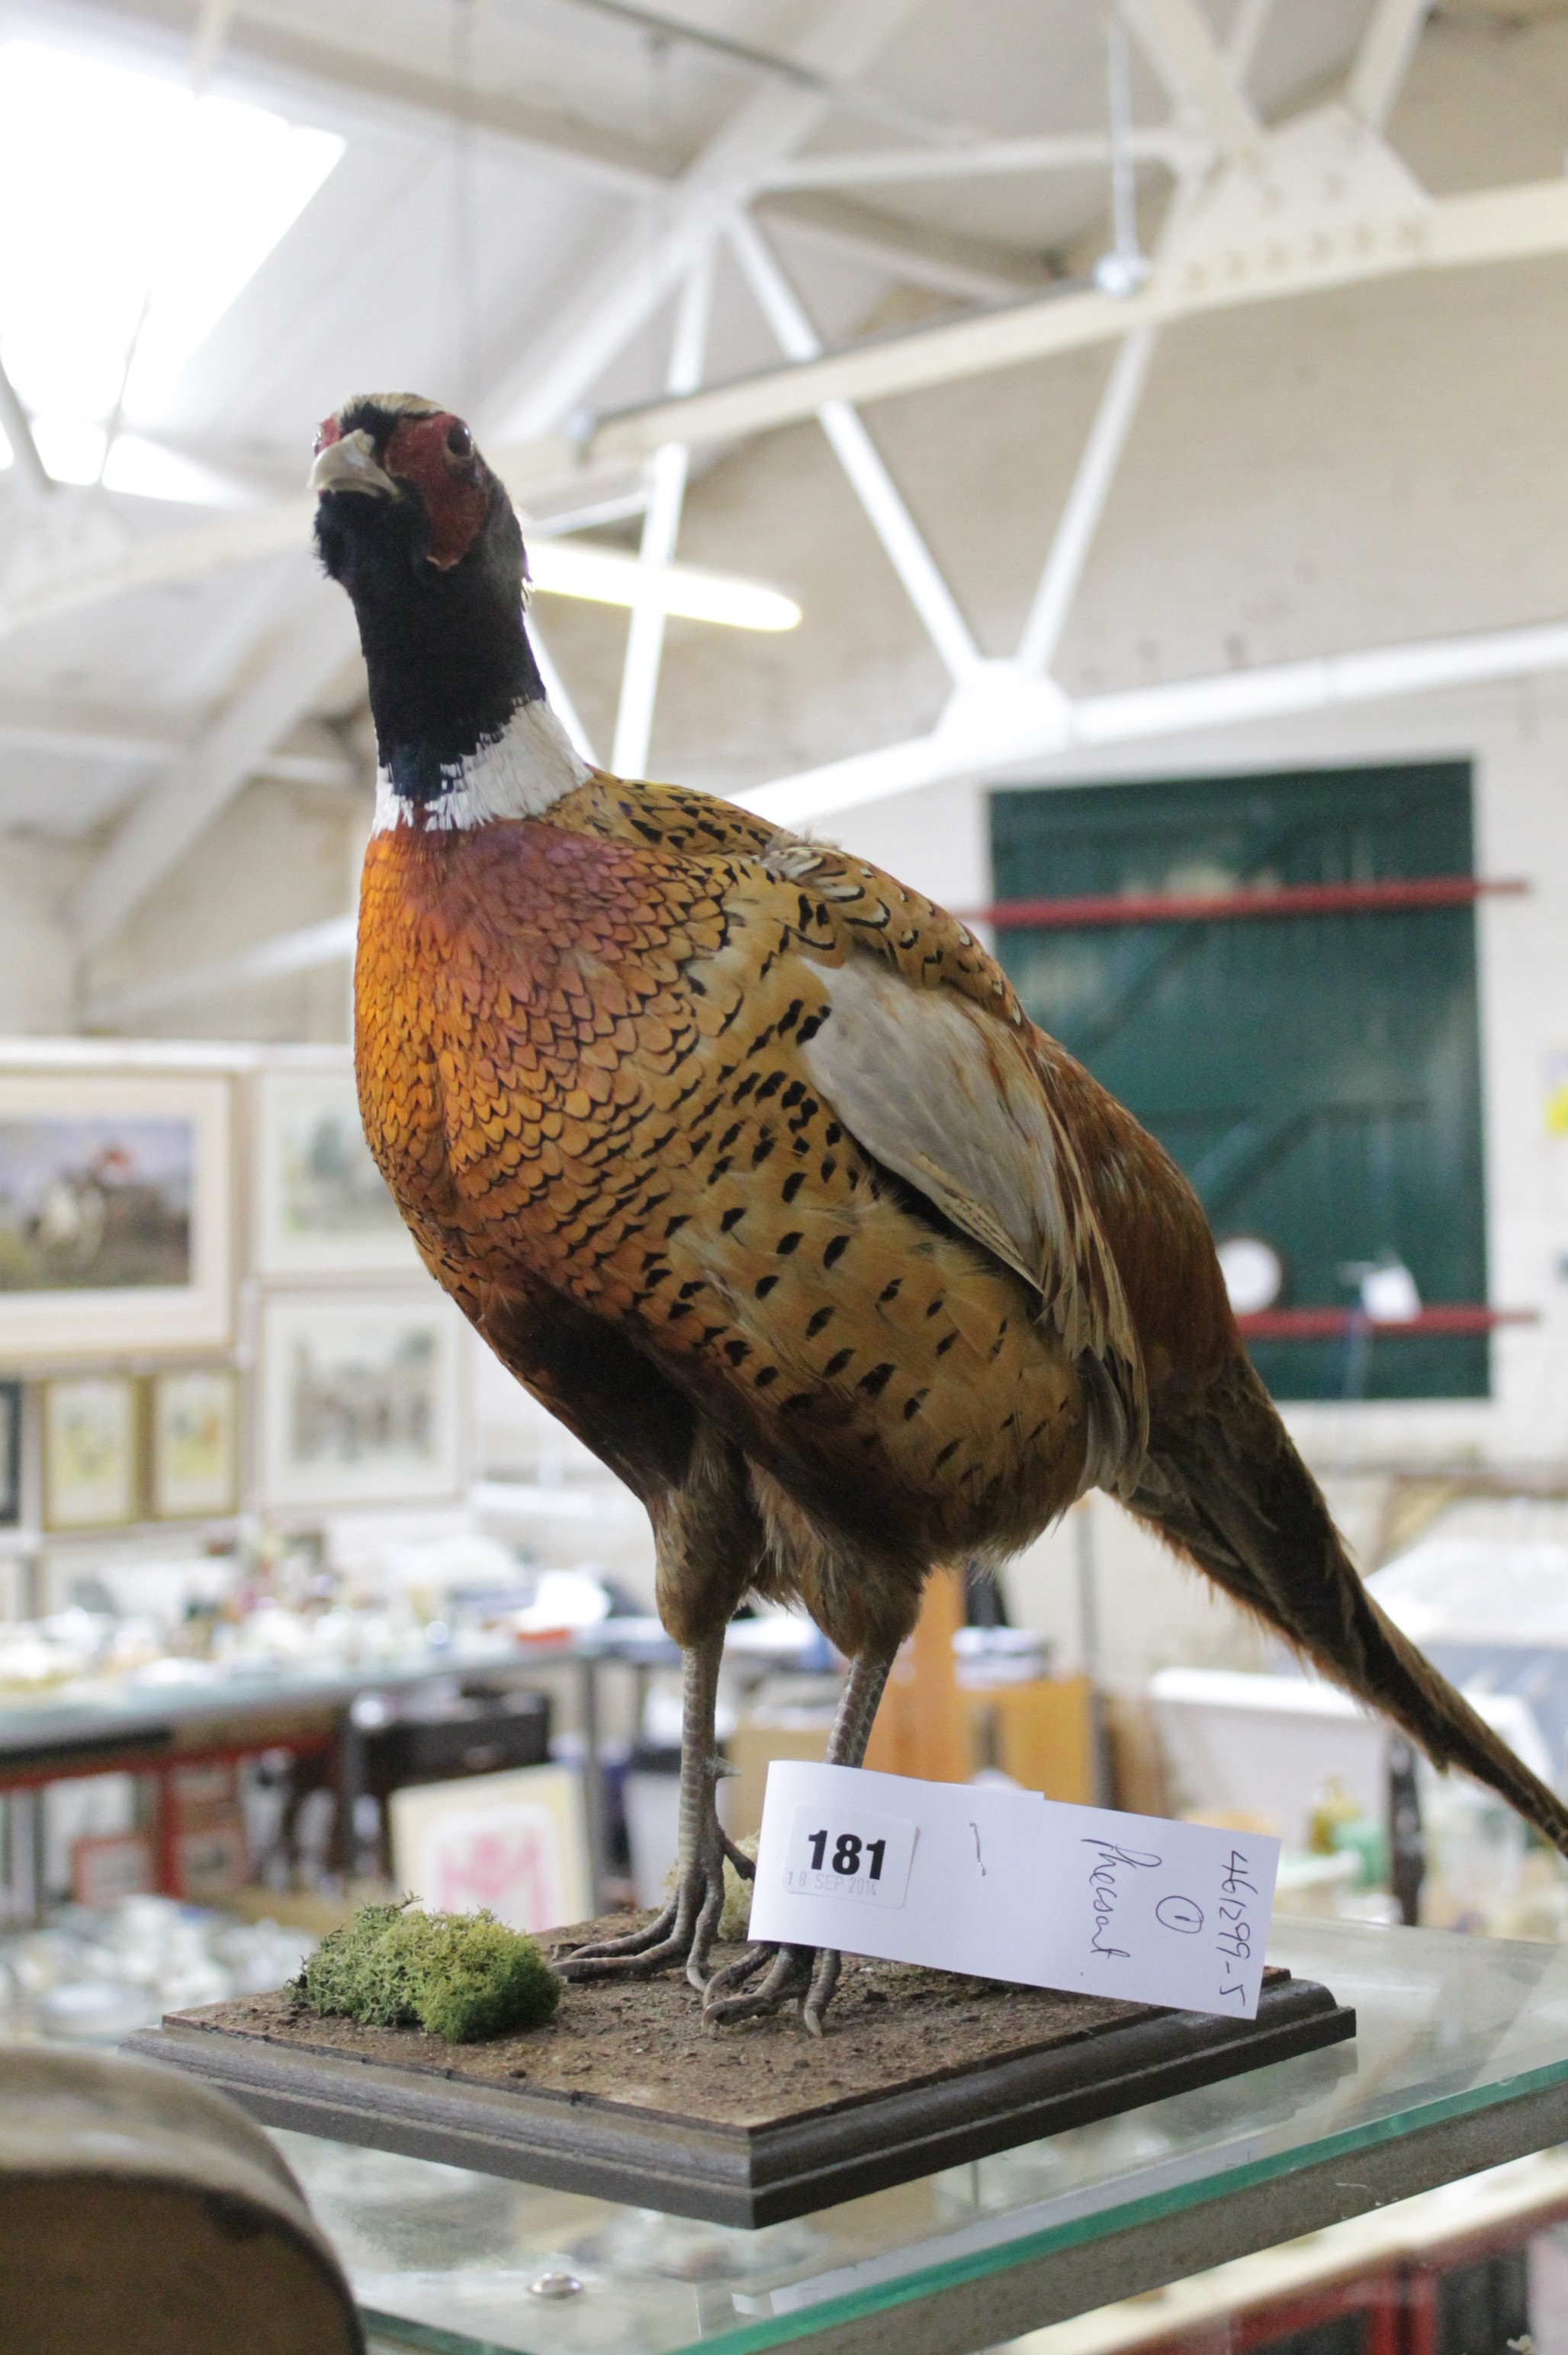 Taxidermy - a stuffed male pheasant, mounted on wooden plinth; 41cm high